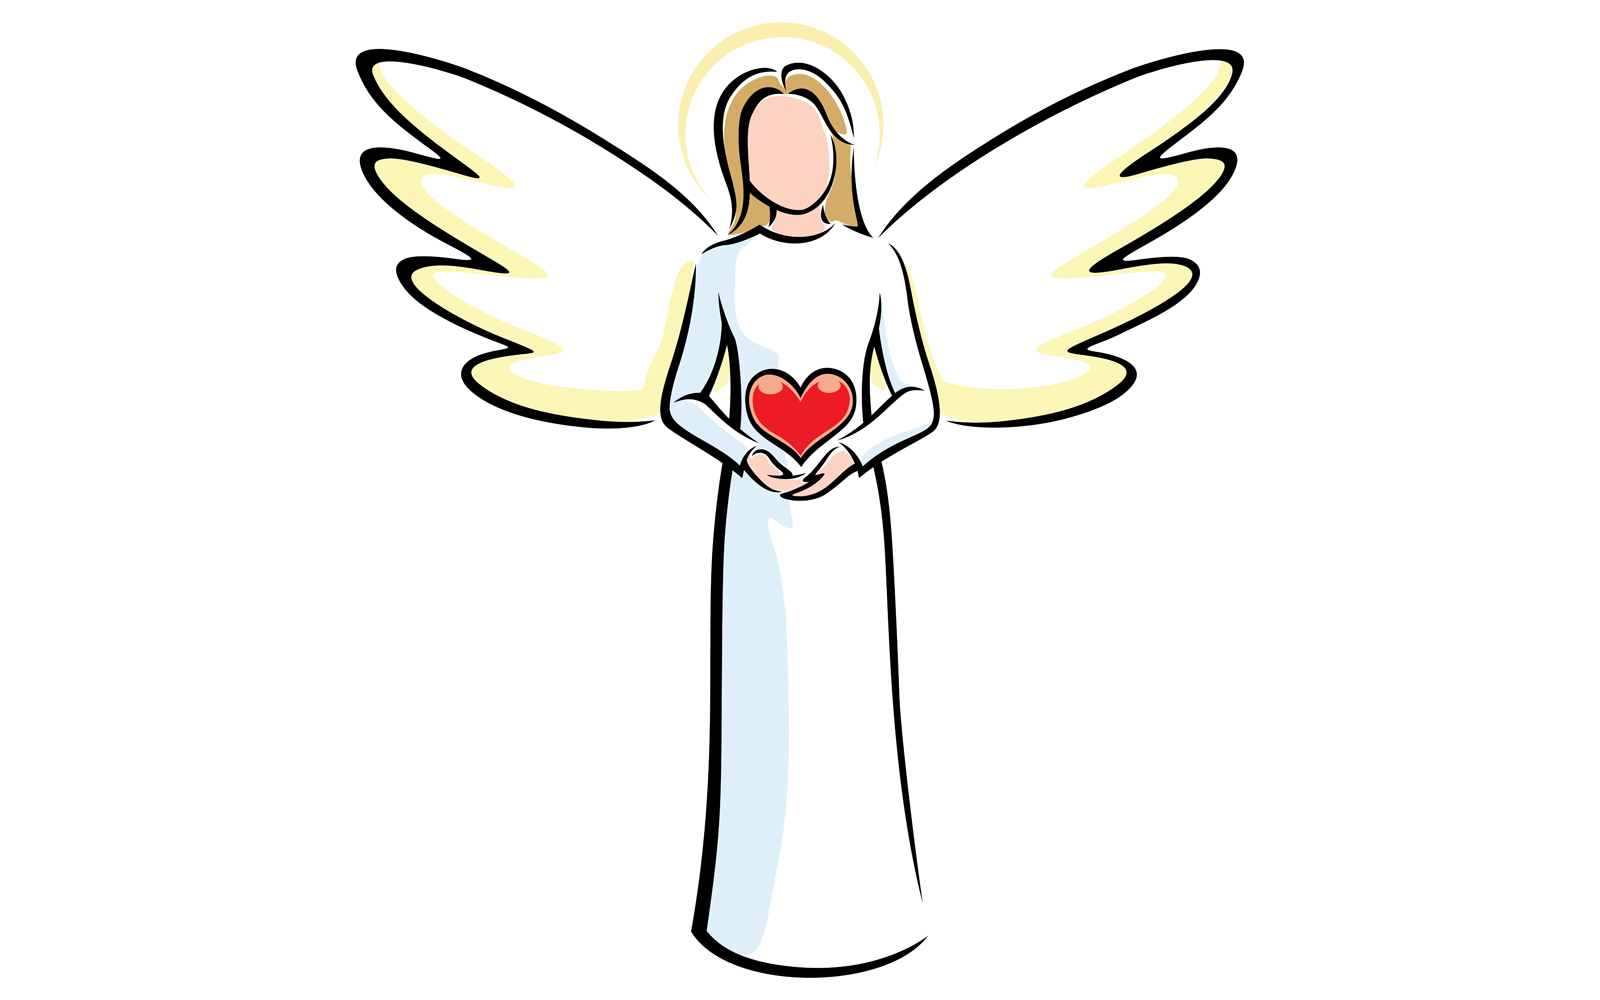 Angel Holding Heart - Illustration